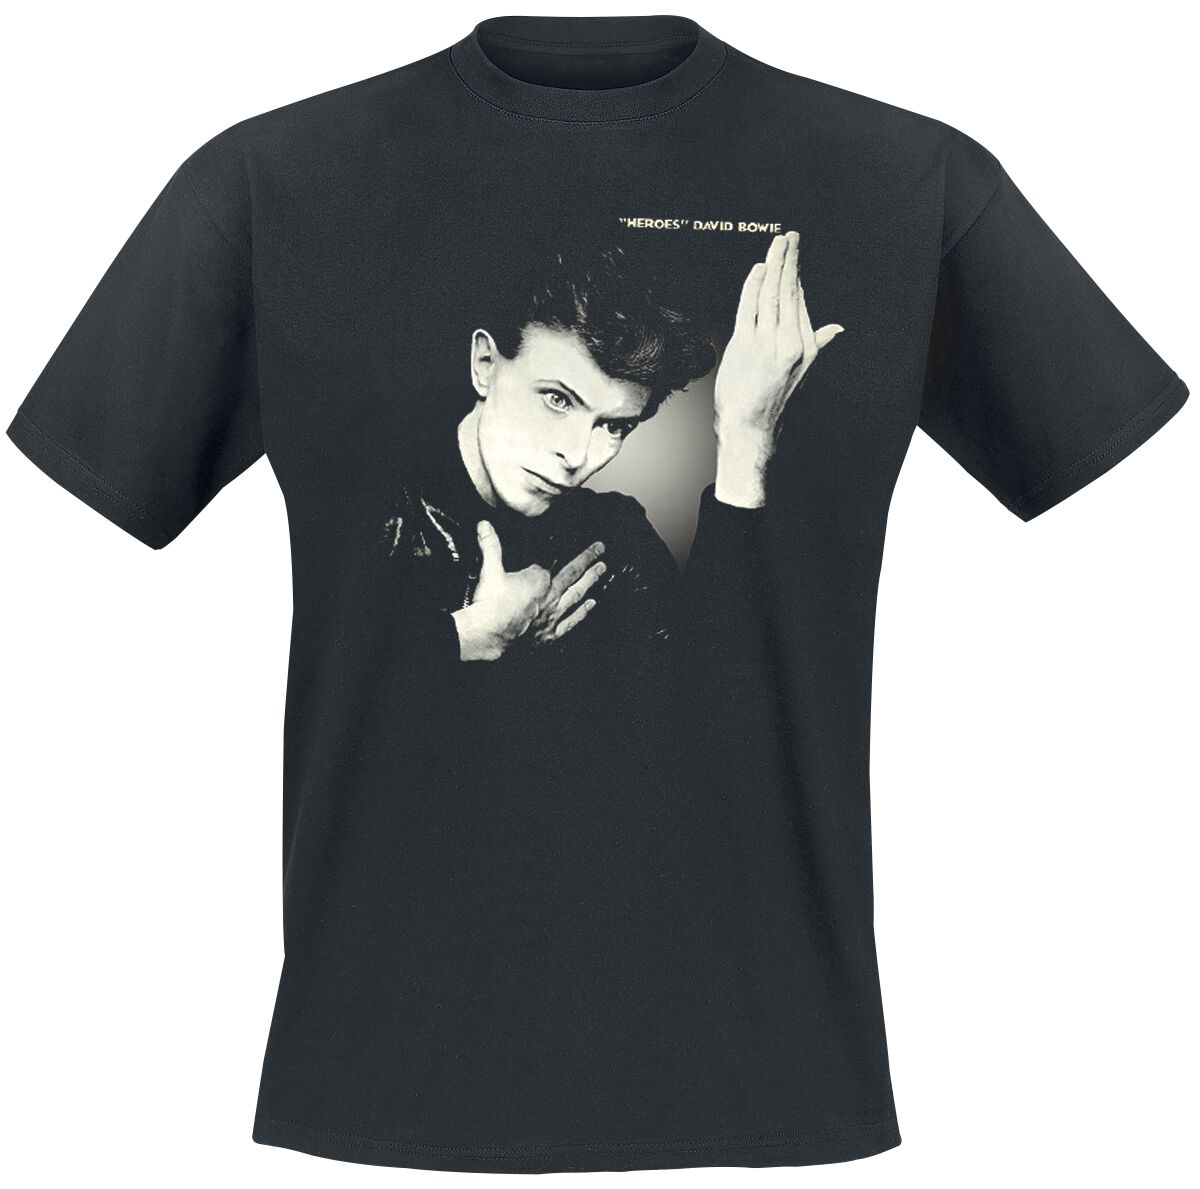 Image of David Bowie Heroes Album Cover T-Shirt schwarz